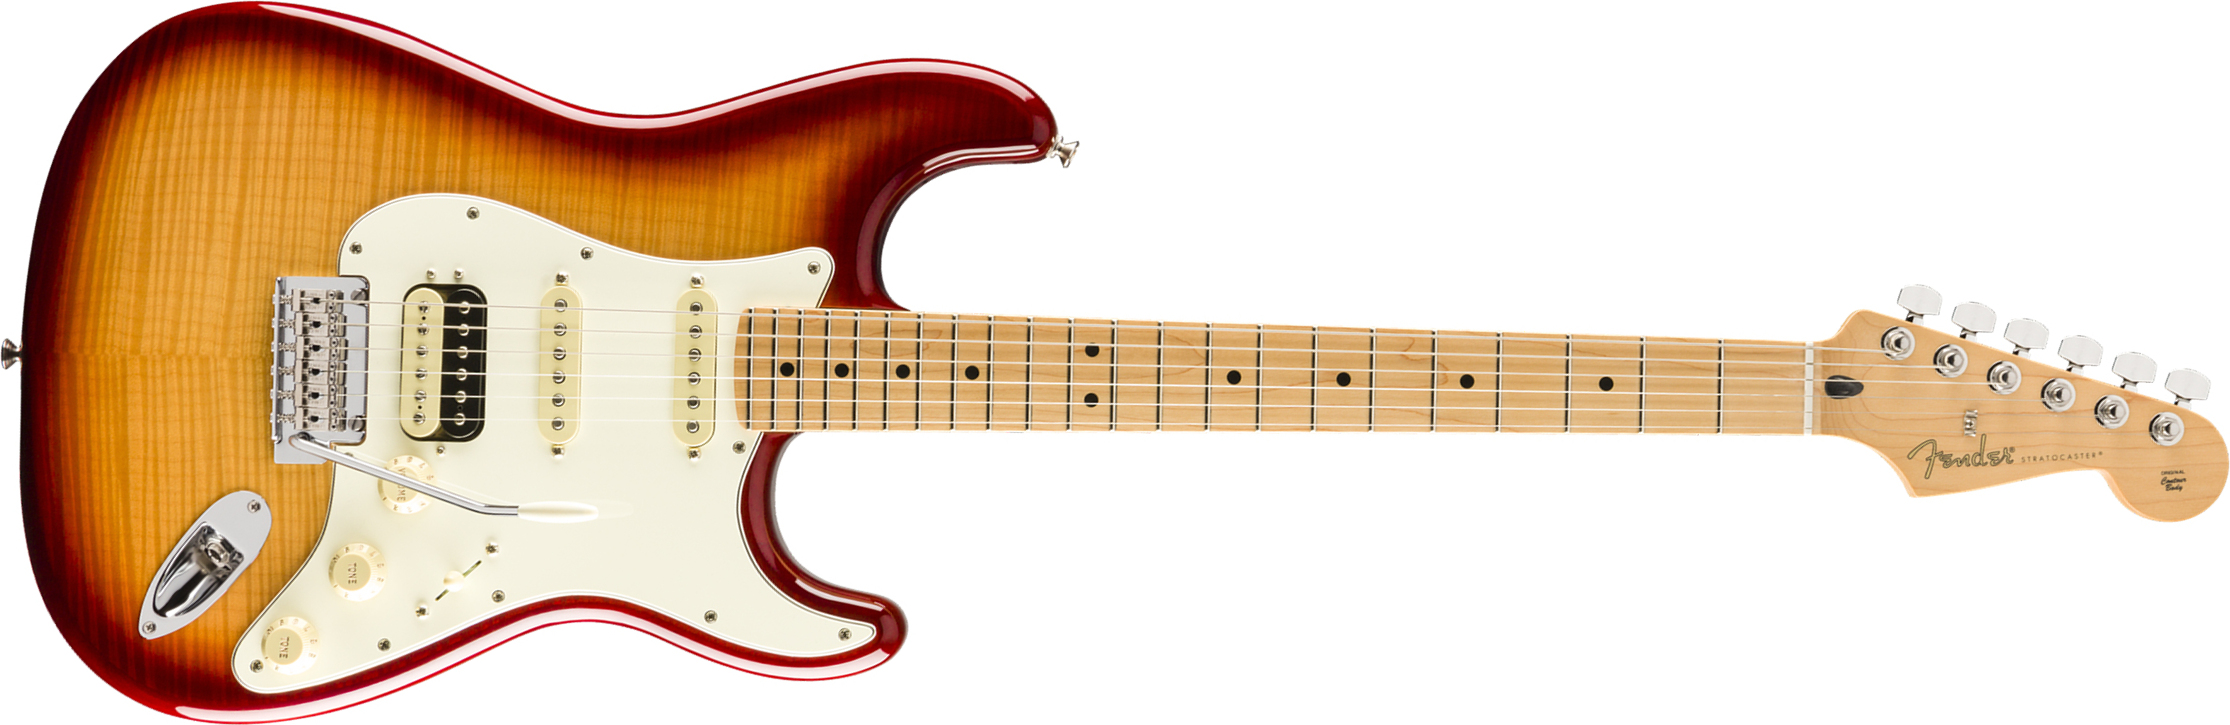 Fender Strat Player Hss Plus Top Fsr Ltd 2019 Mex Mn - Sienna Sunburst - E-Gitarre in Str-Form - Main picture